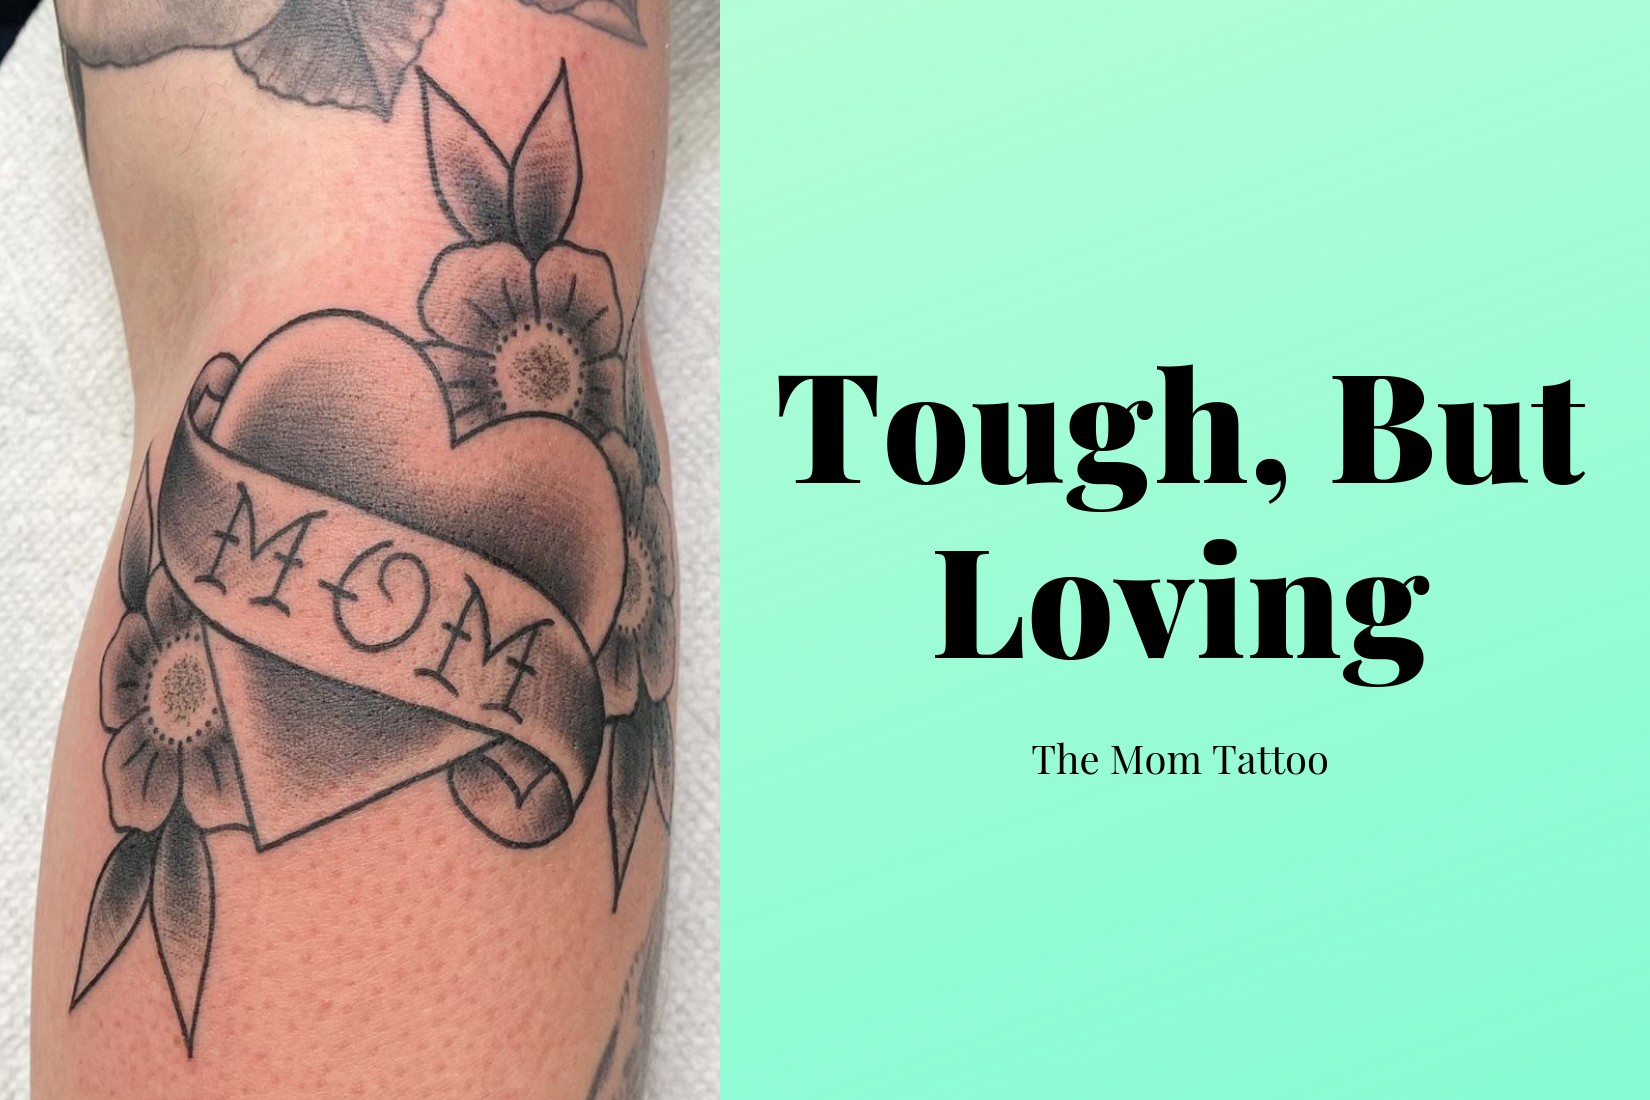 Classic MOM Tattoo by @matttrimbletattoo #momtattoo #chesttattoo  #hearttattoo #momheart #familytattoo #family #love #traditionaltattoo #...  | Instagram